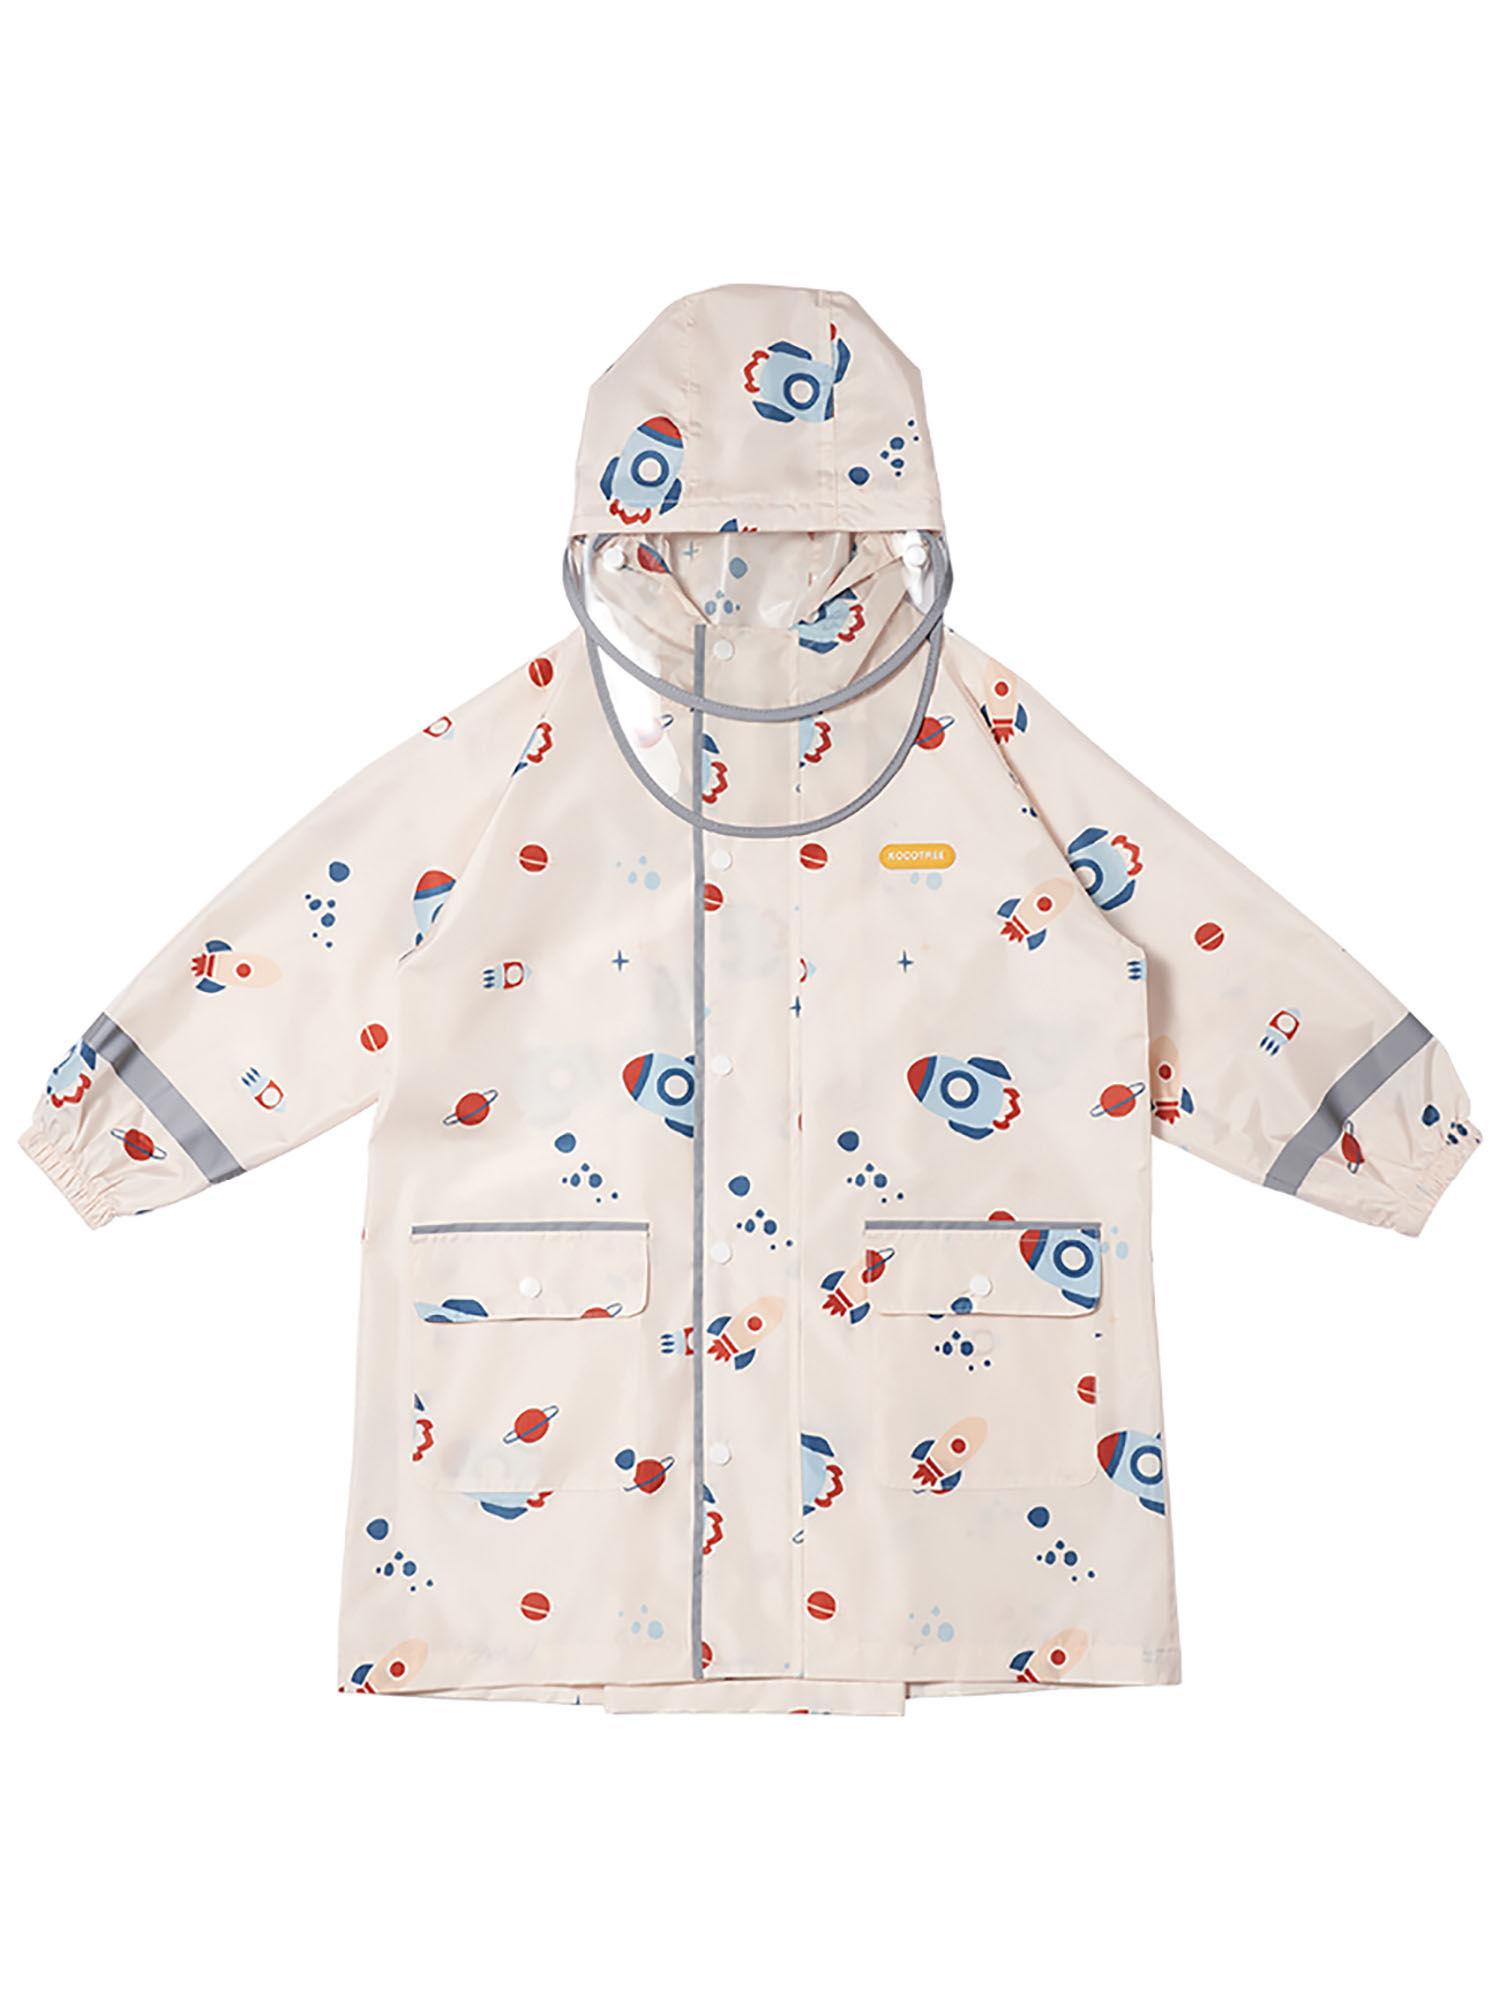 kids-raincoat-jacket-style-rocket-galaxy-theme,cream